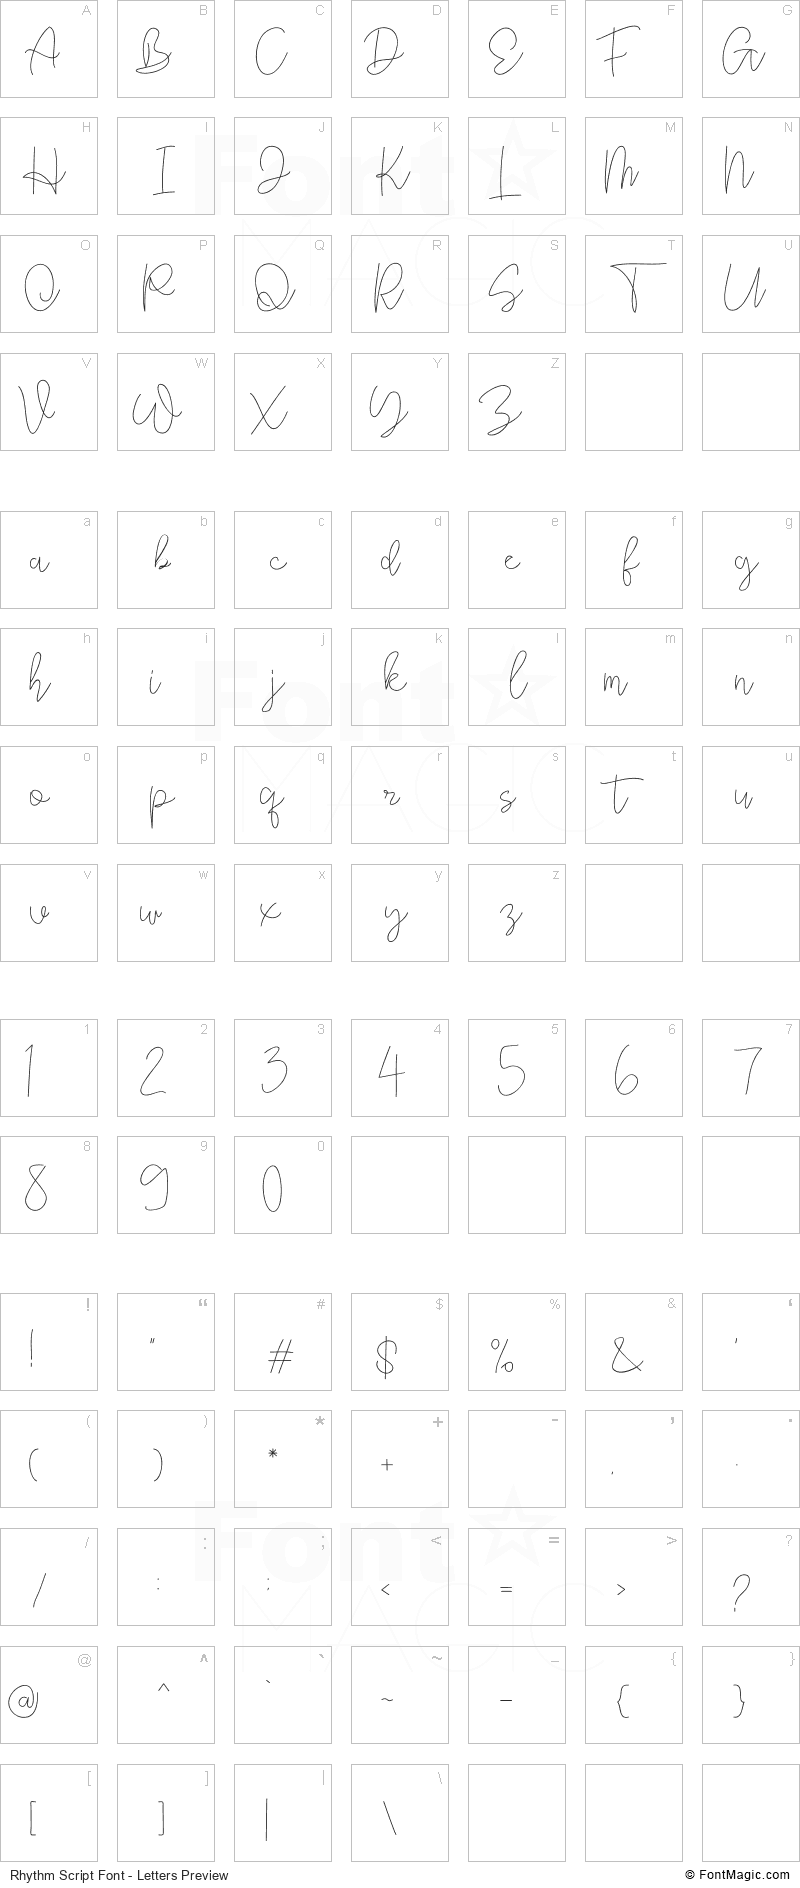 Rhythm Script Font - All Latters Preview Chart